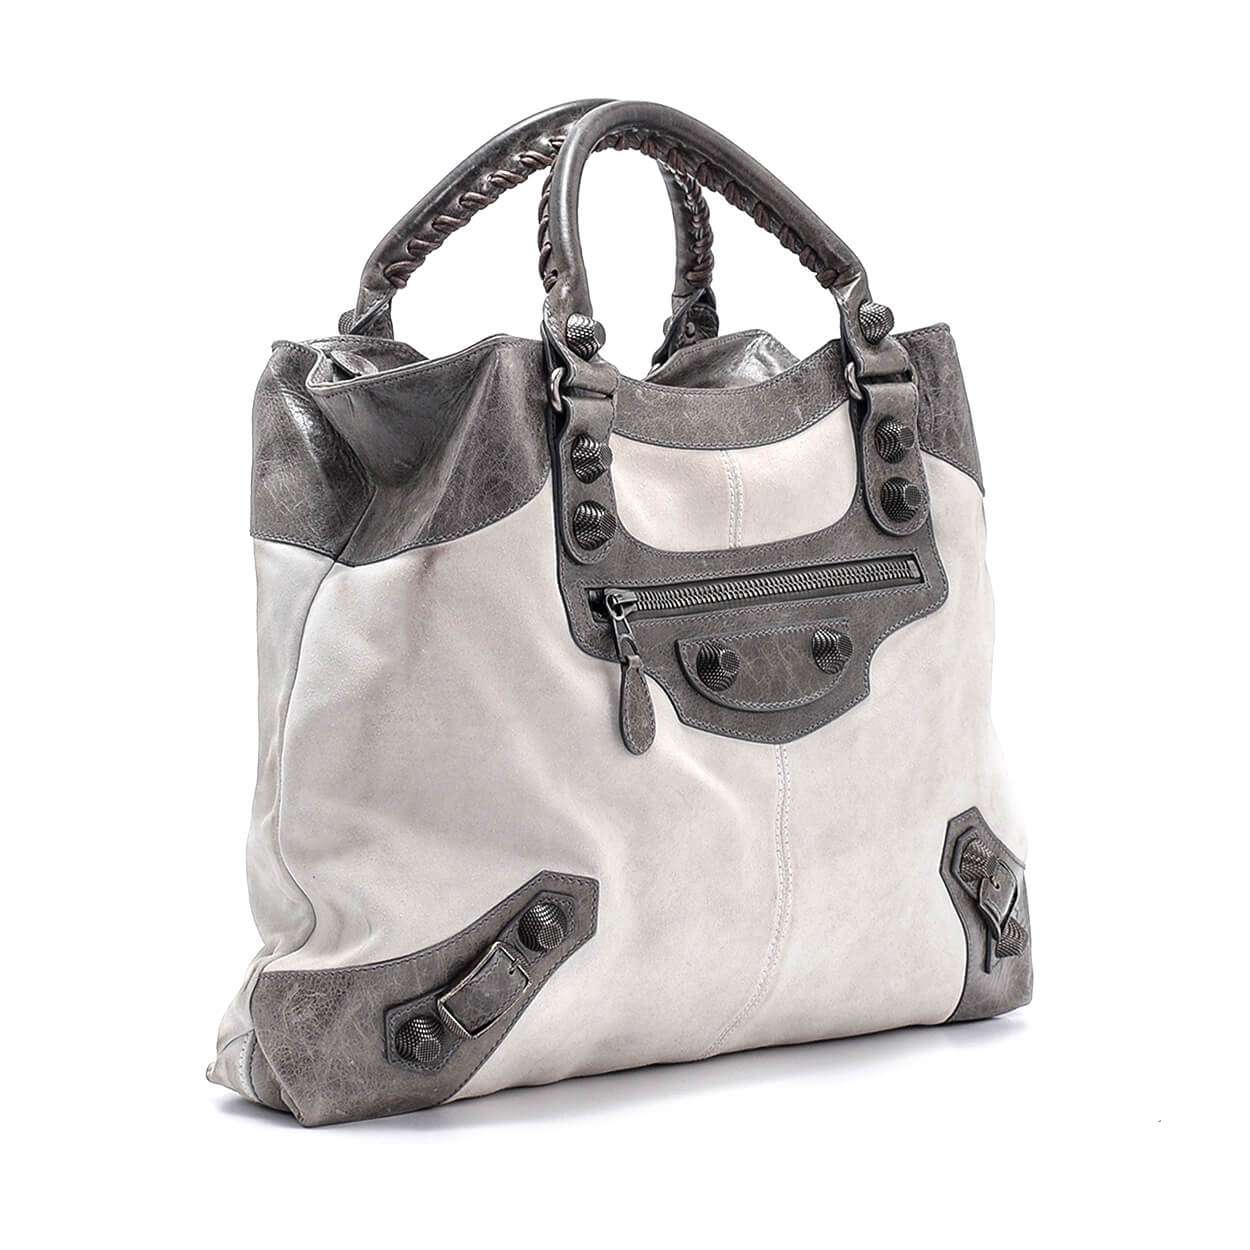 Balenciaga Grey Suede and Leather Giant Velo Bag